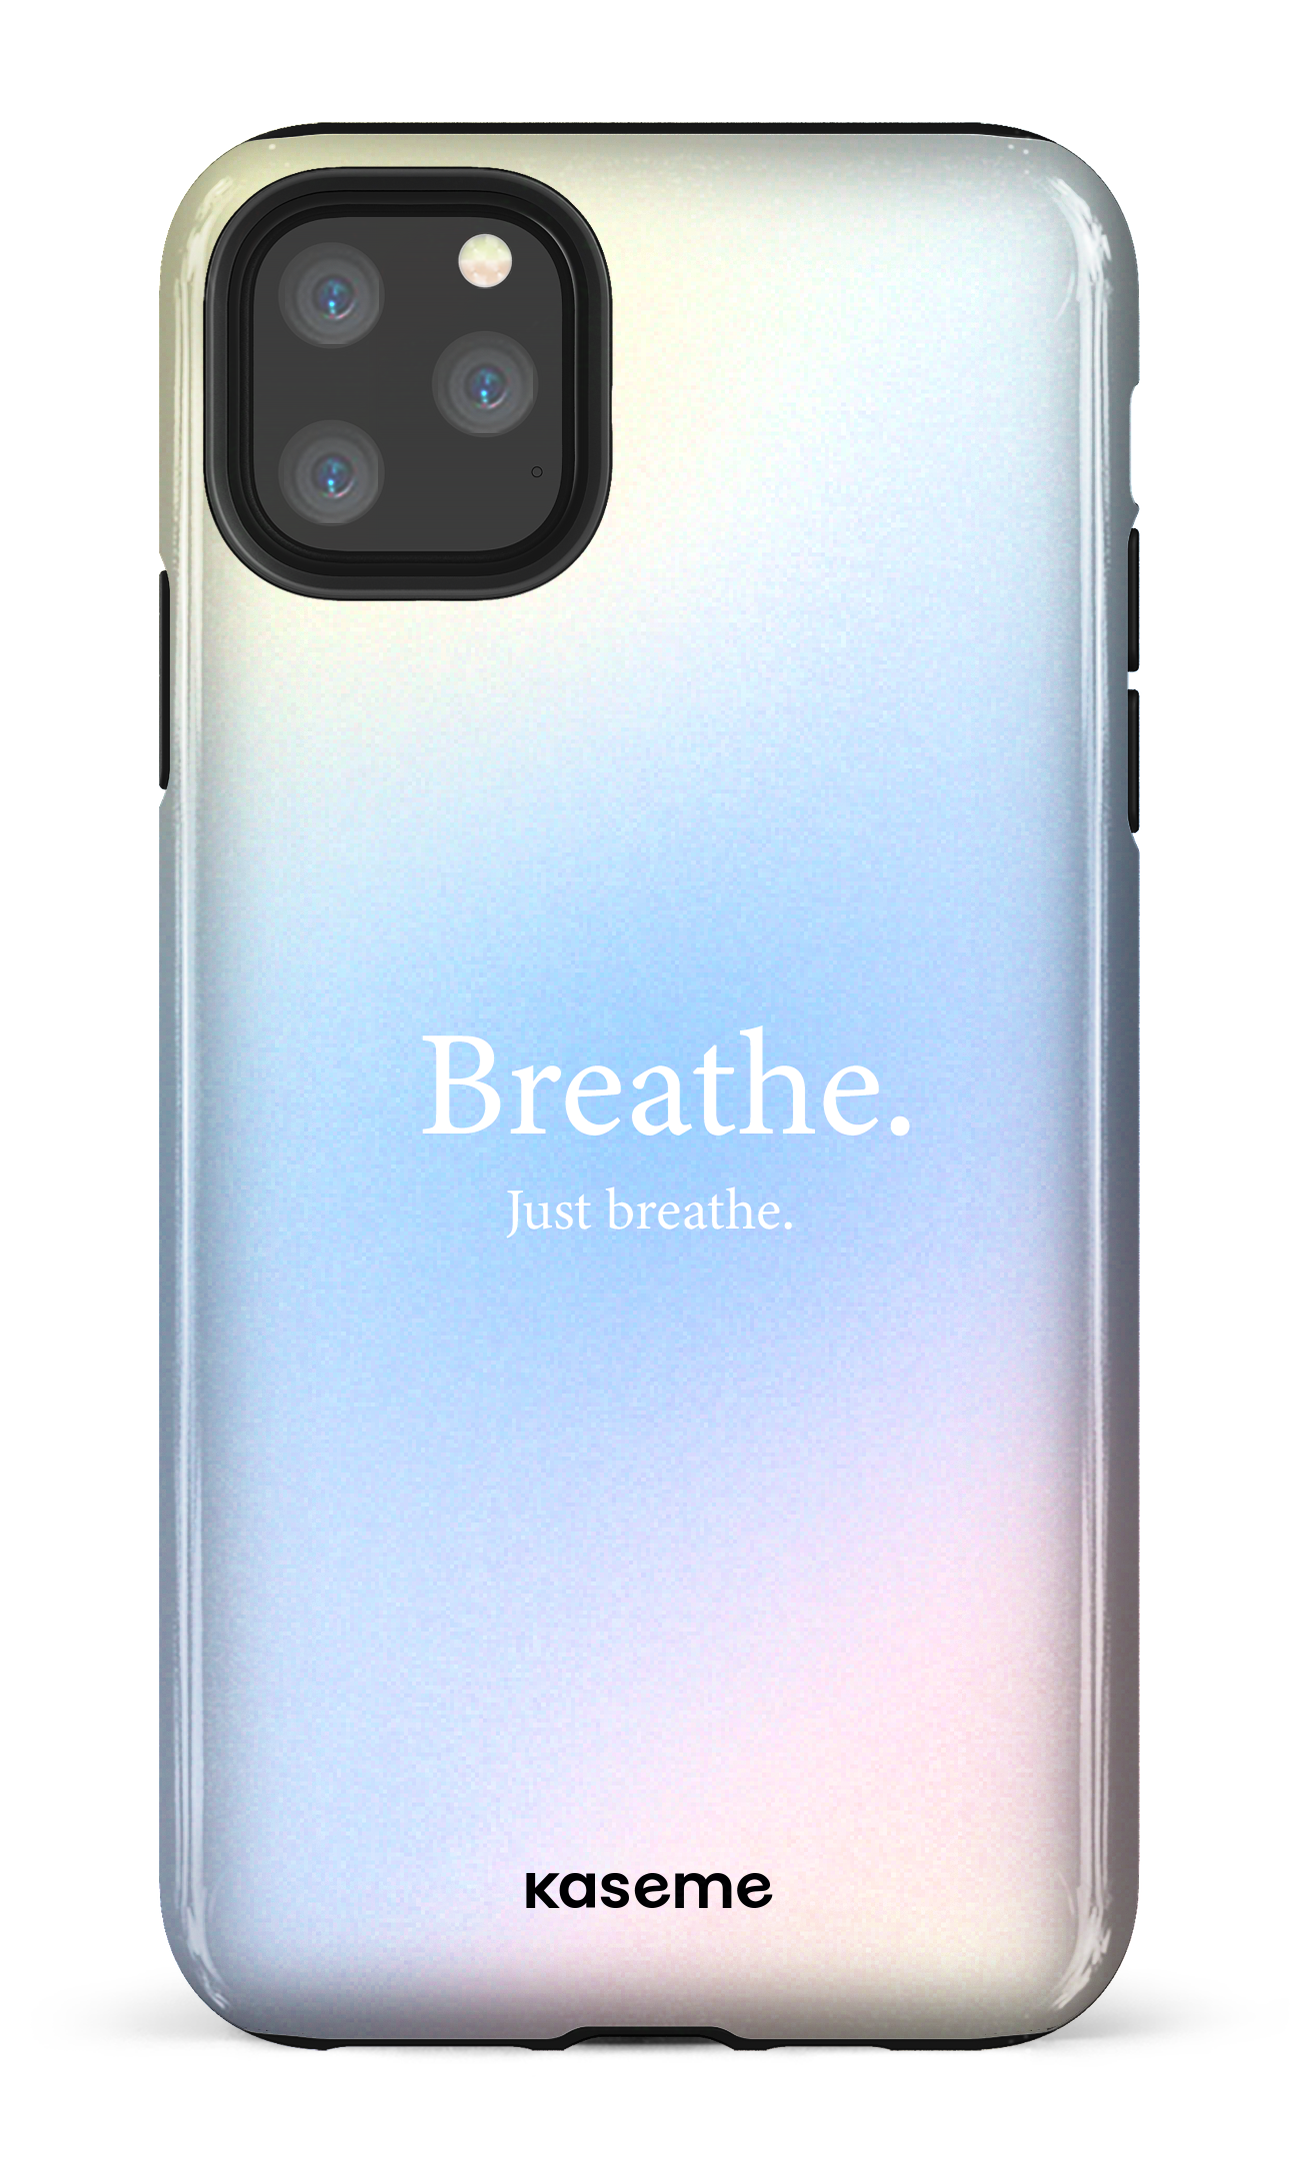 Just breathe blue - iPhone 11 Pro Max